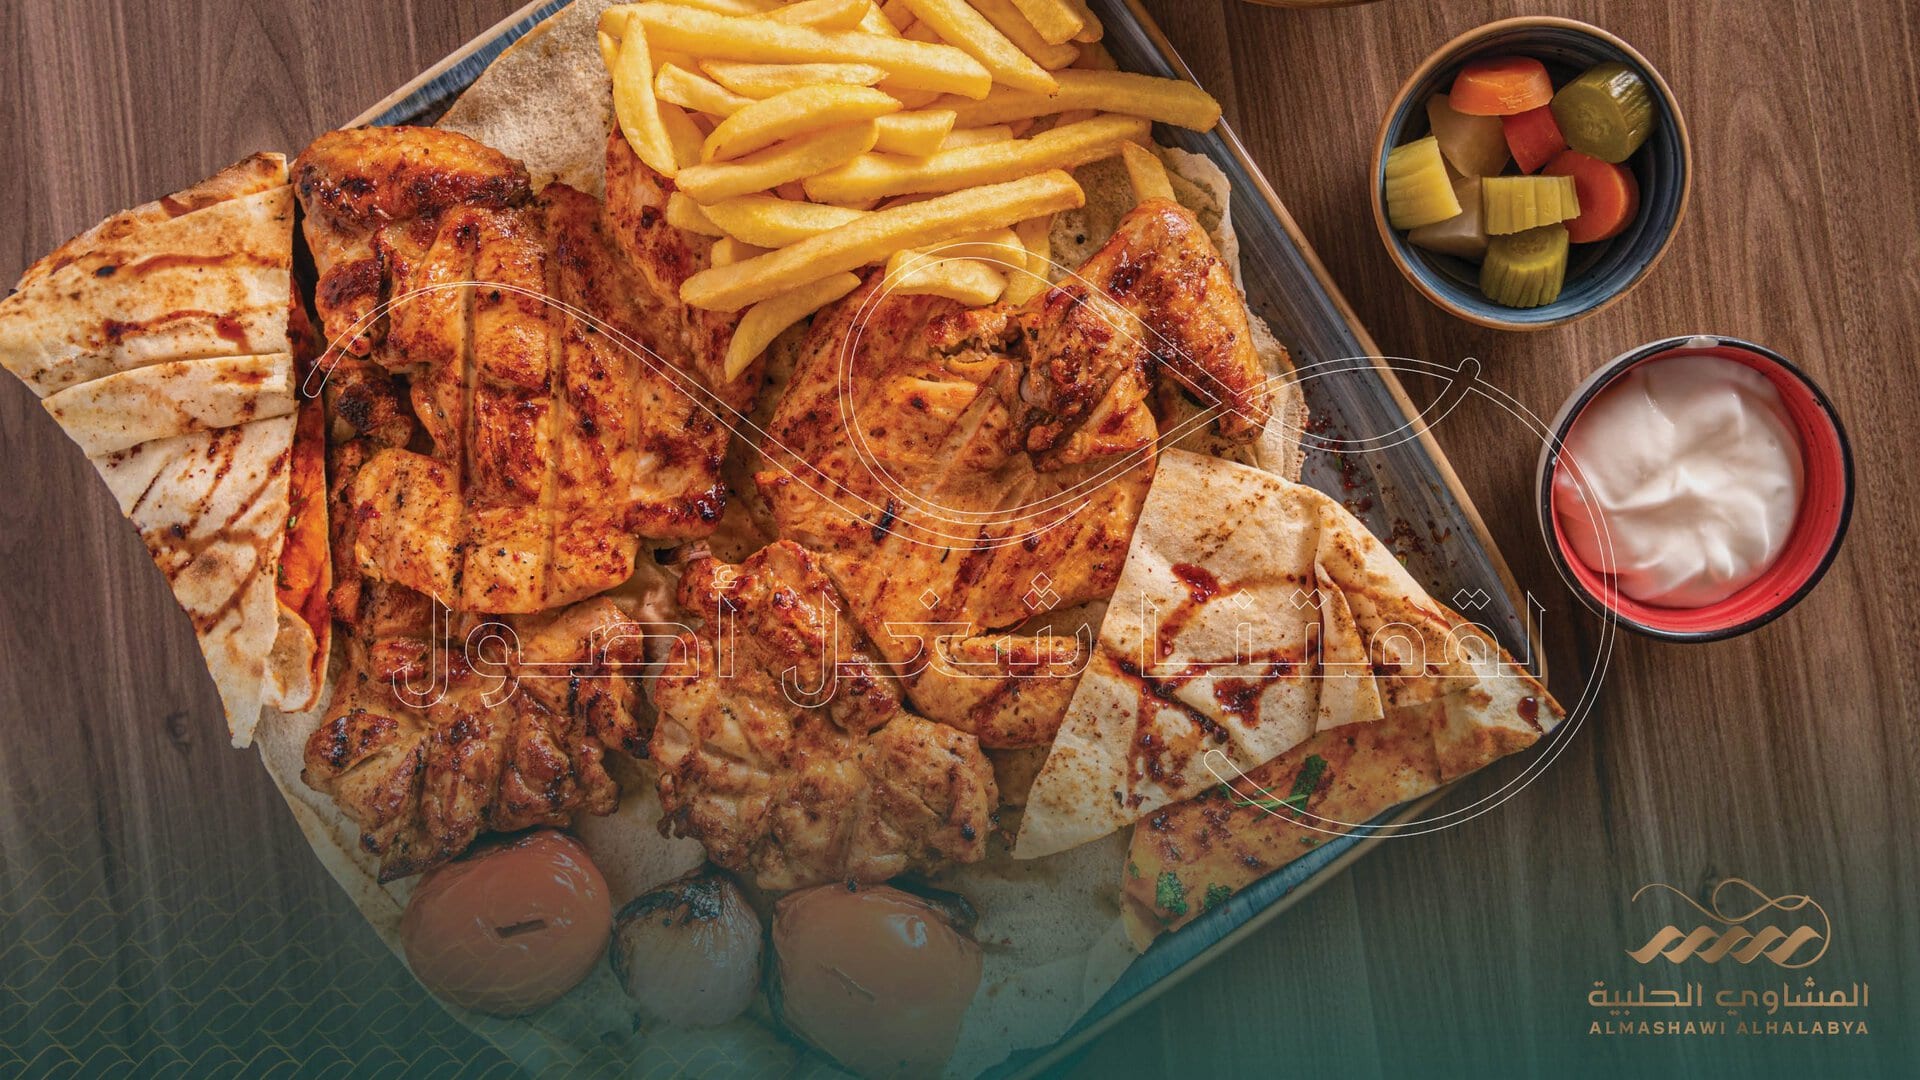 Let Your Taste Buds Sing with Grilled Chicken: Get the Best BBQ Chicken in Sharjah